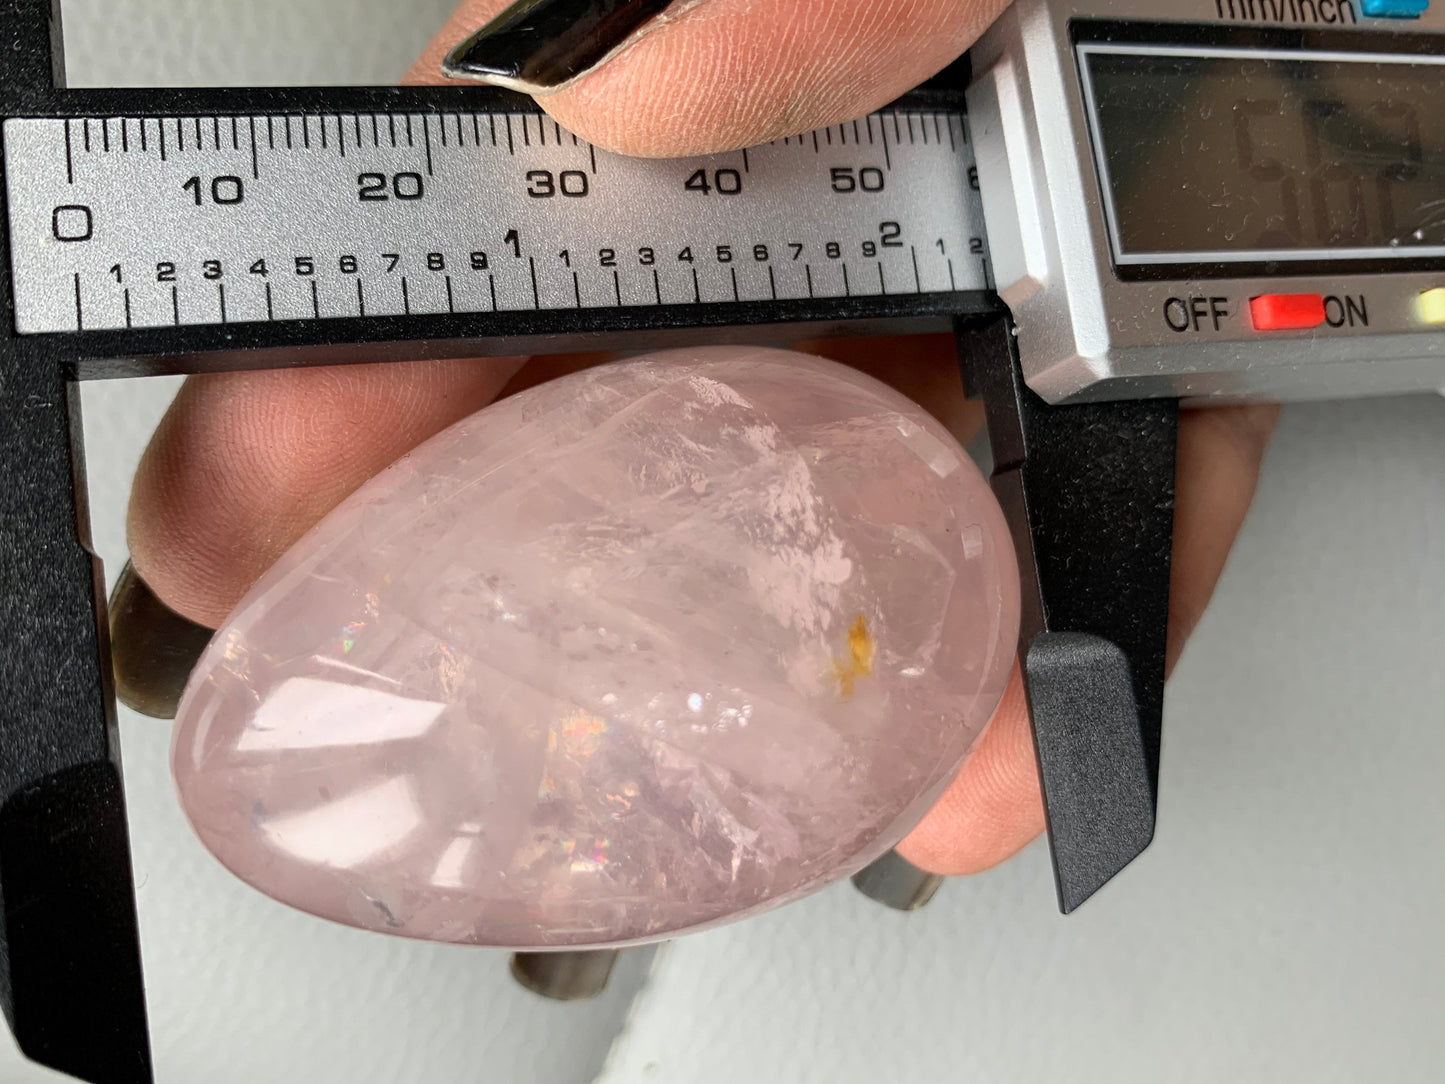 Star Rose Quartz Gemstone Crystal Egg - Small